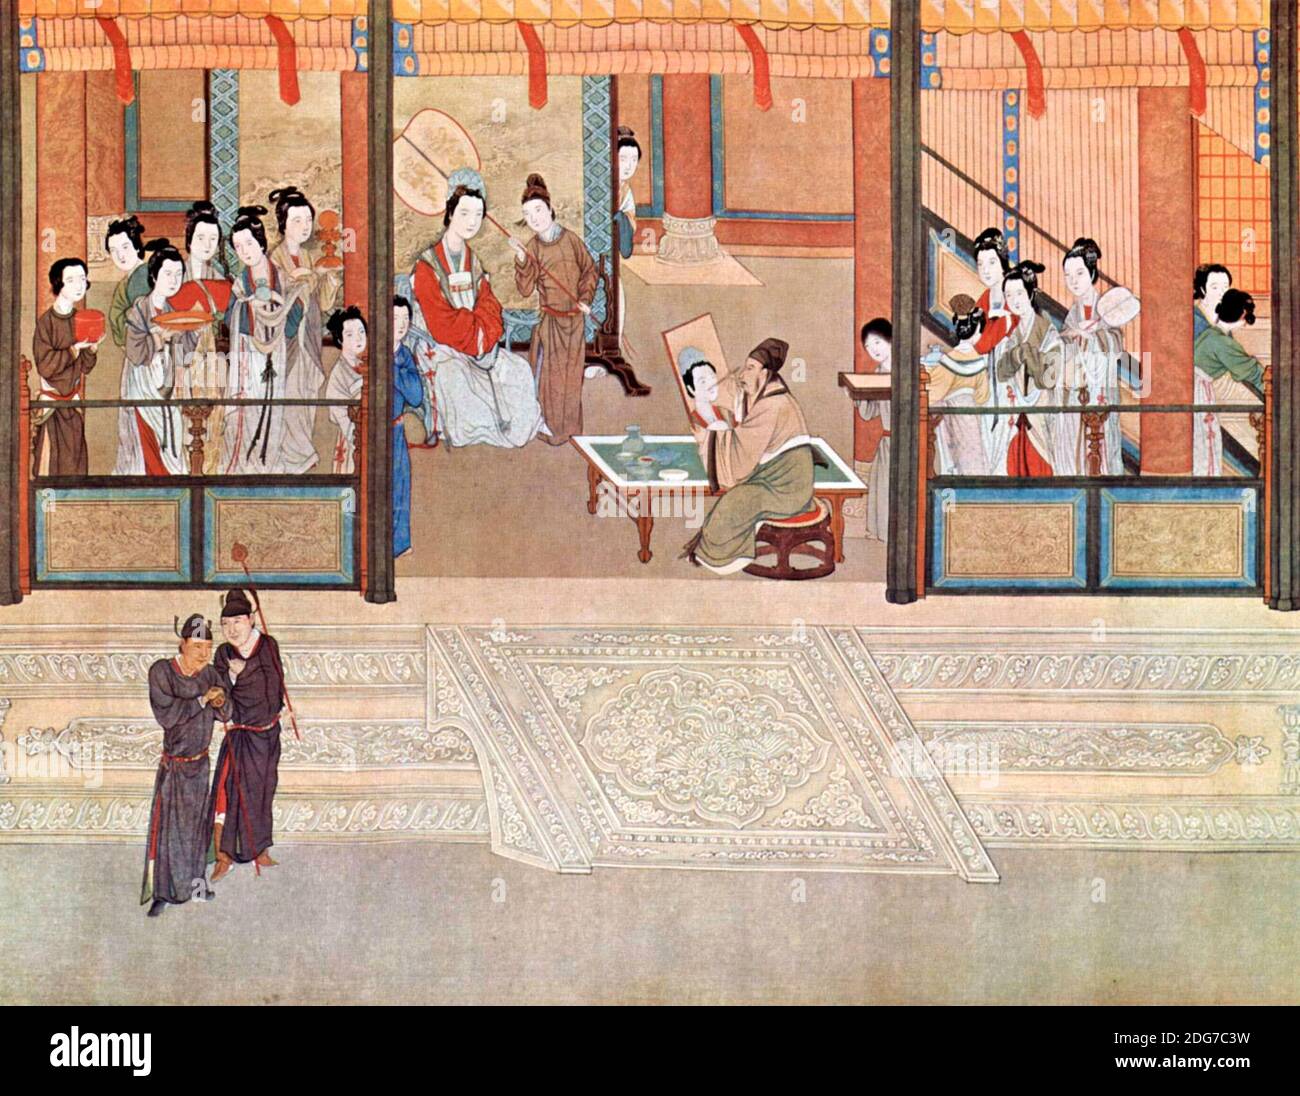 Mattina di primavera nel Palazzo di Han - Han Gong Chun Xiao - Dinastia Ming, Cina Foto Stock